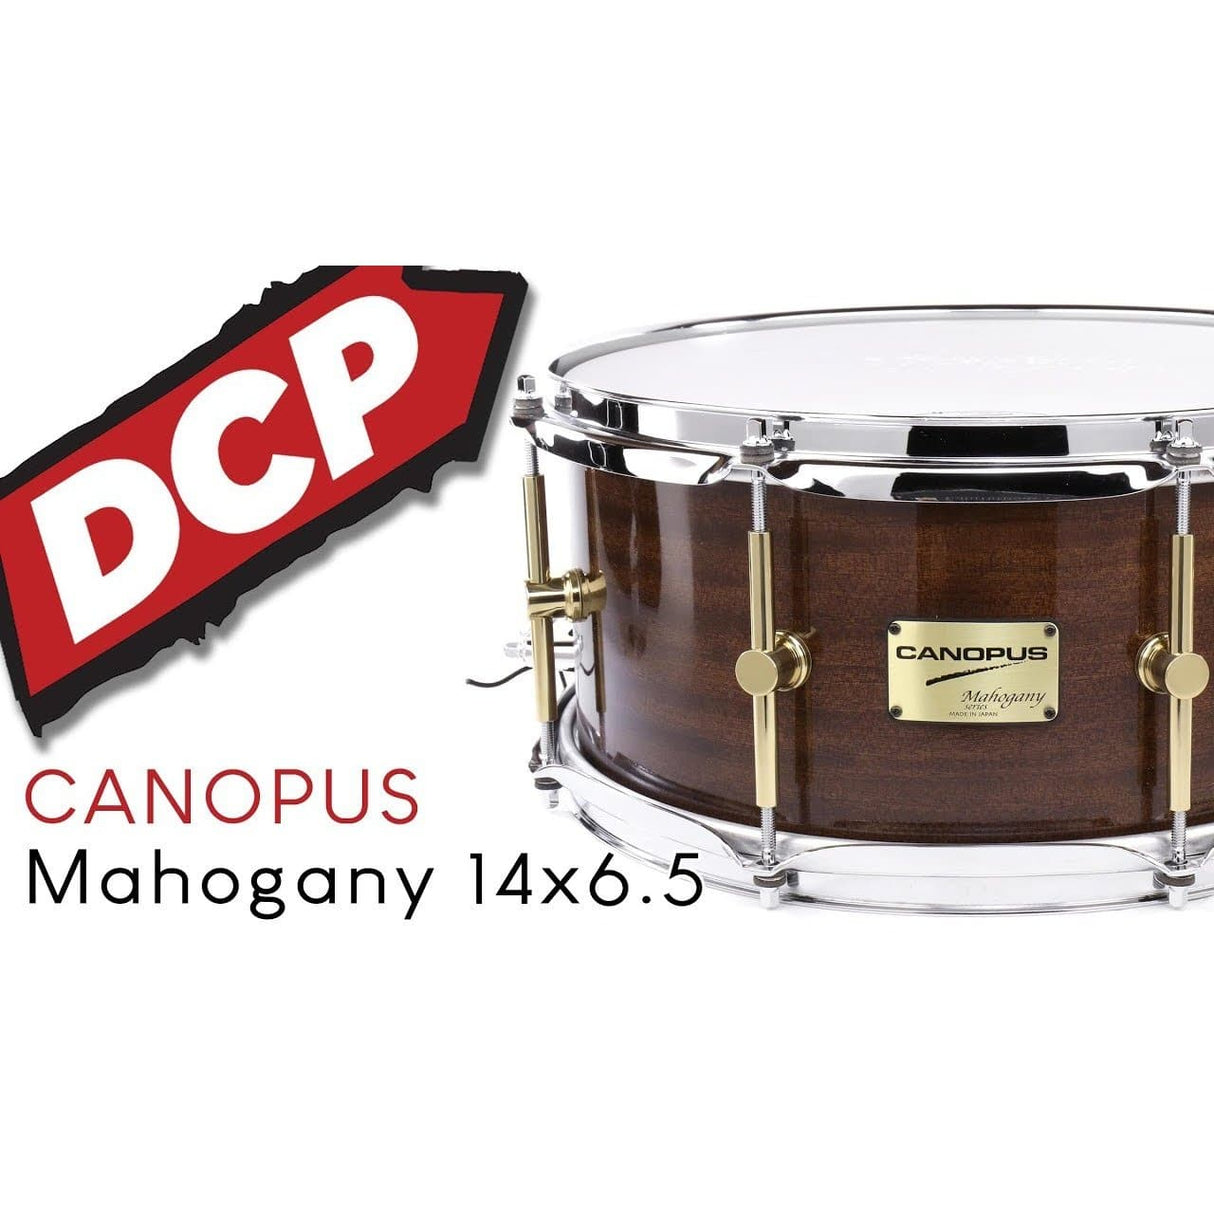 Canopus Mahogany Snare Drum 14x6.5 Black Lacquer